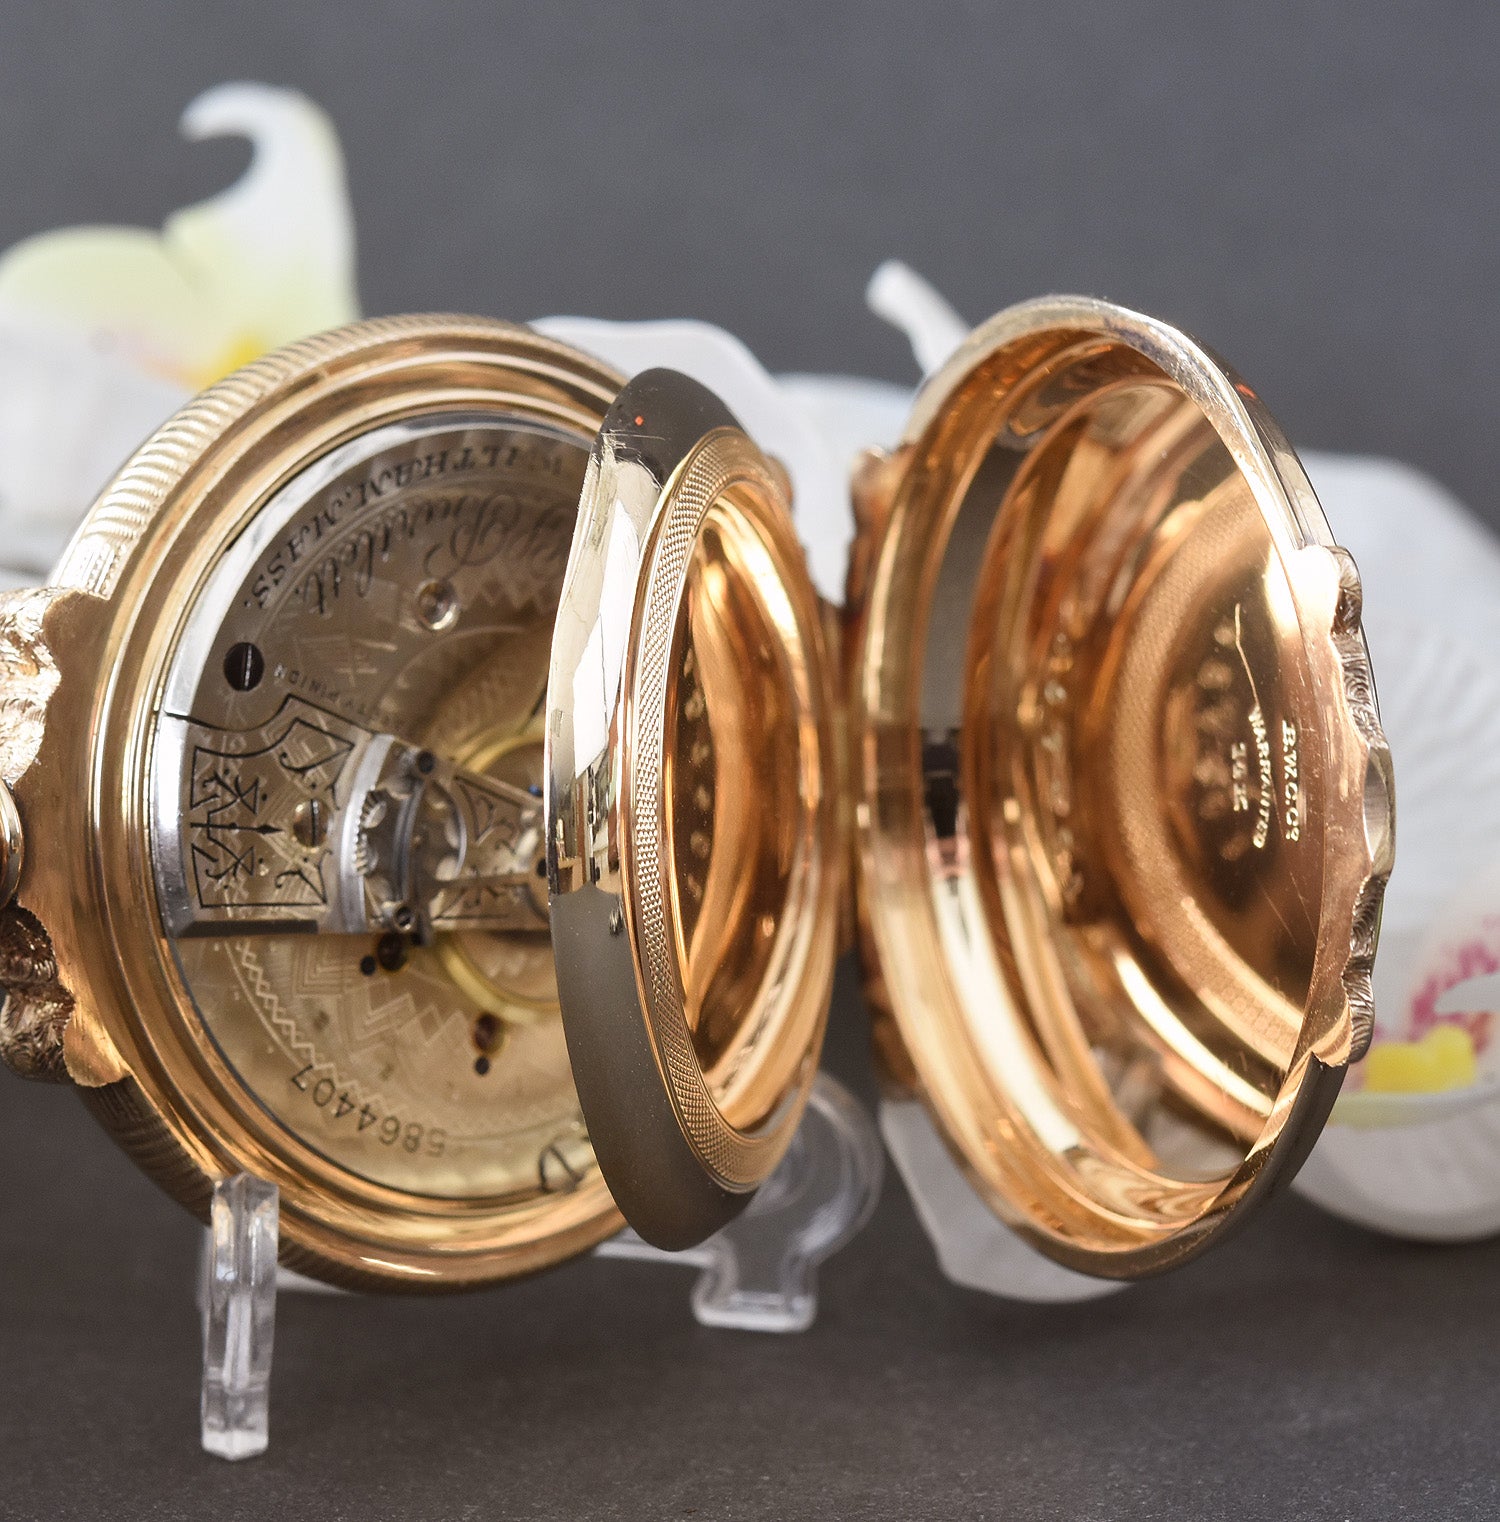 1895 Am. WALTHAM P.S. Bartlett 14K Gold Hunter 18s Pocket Watch